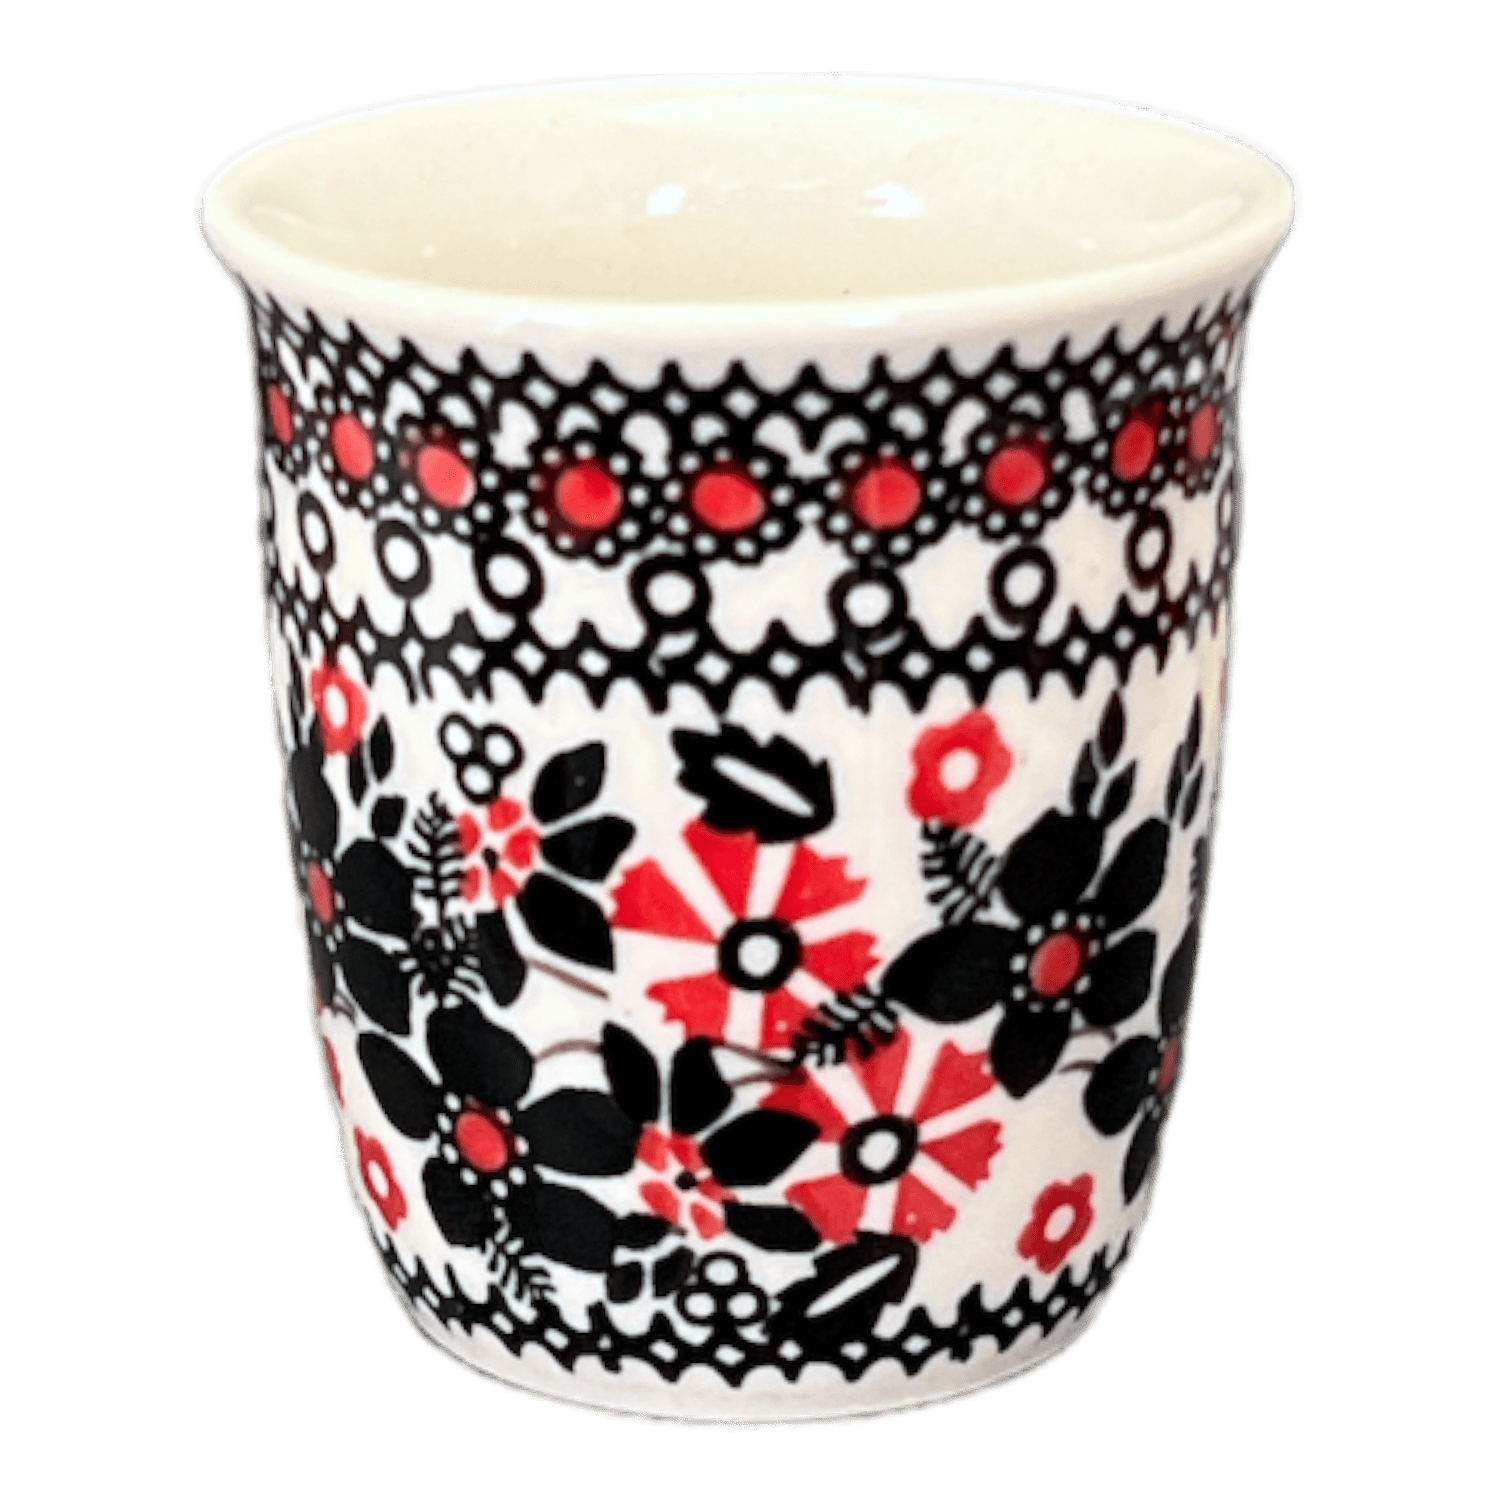 Poppies & Posies Ceramic Measuring Cups